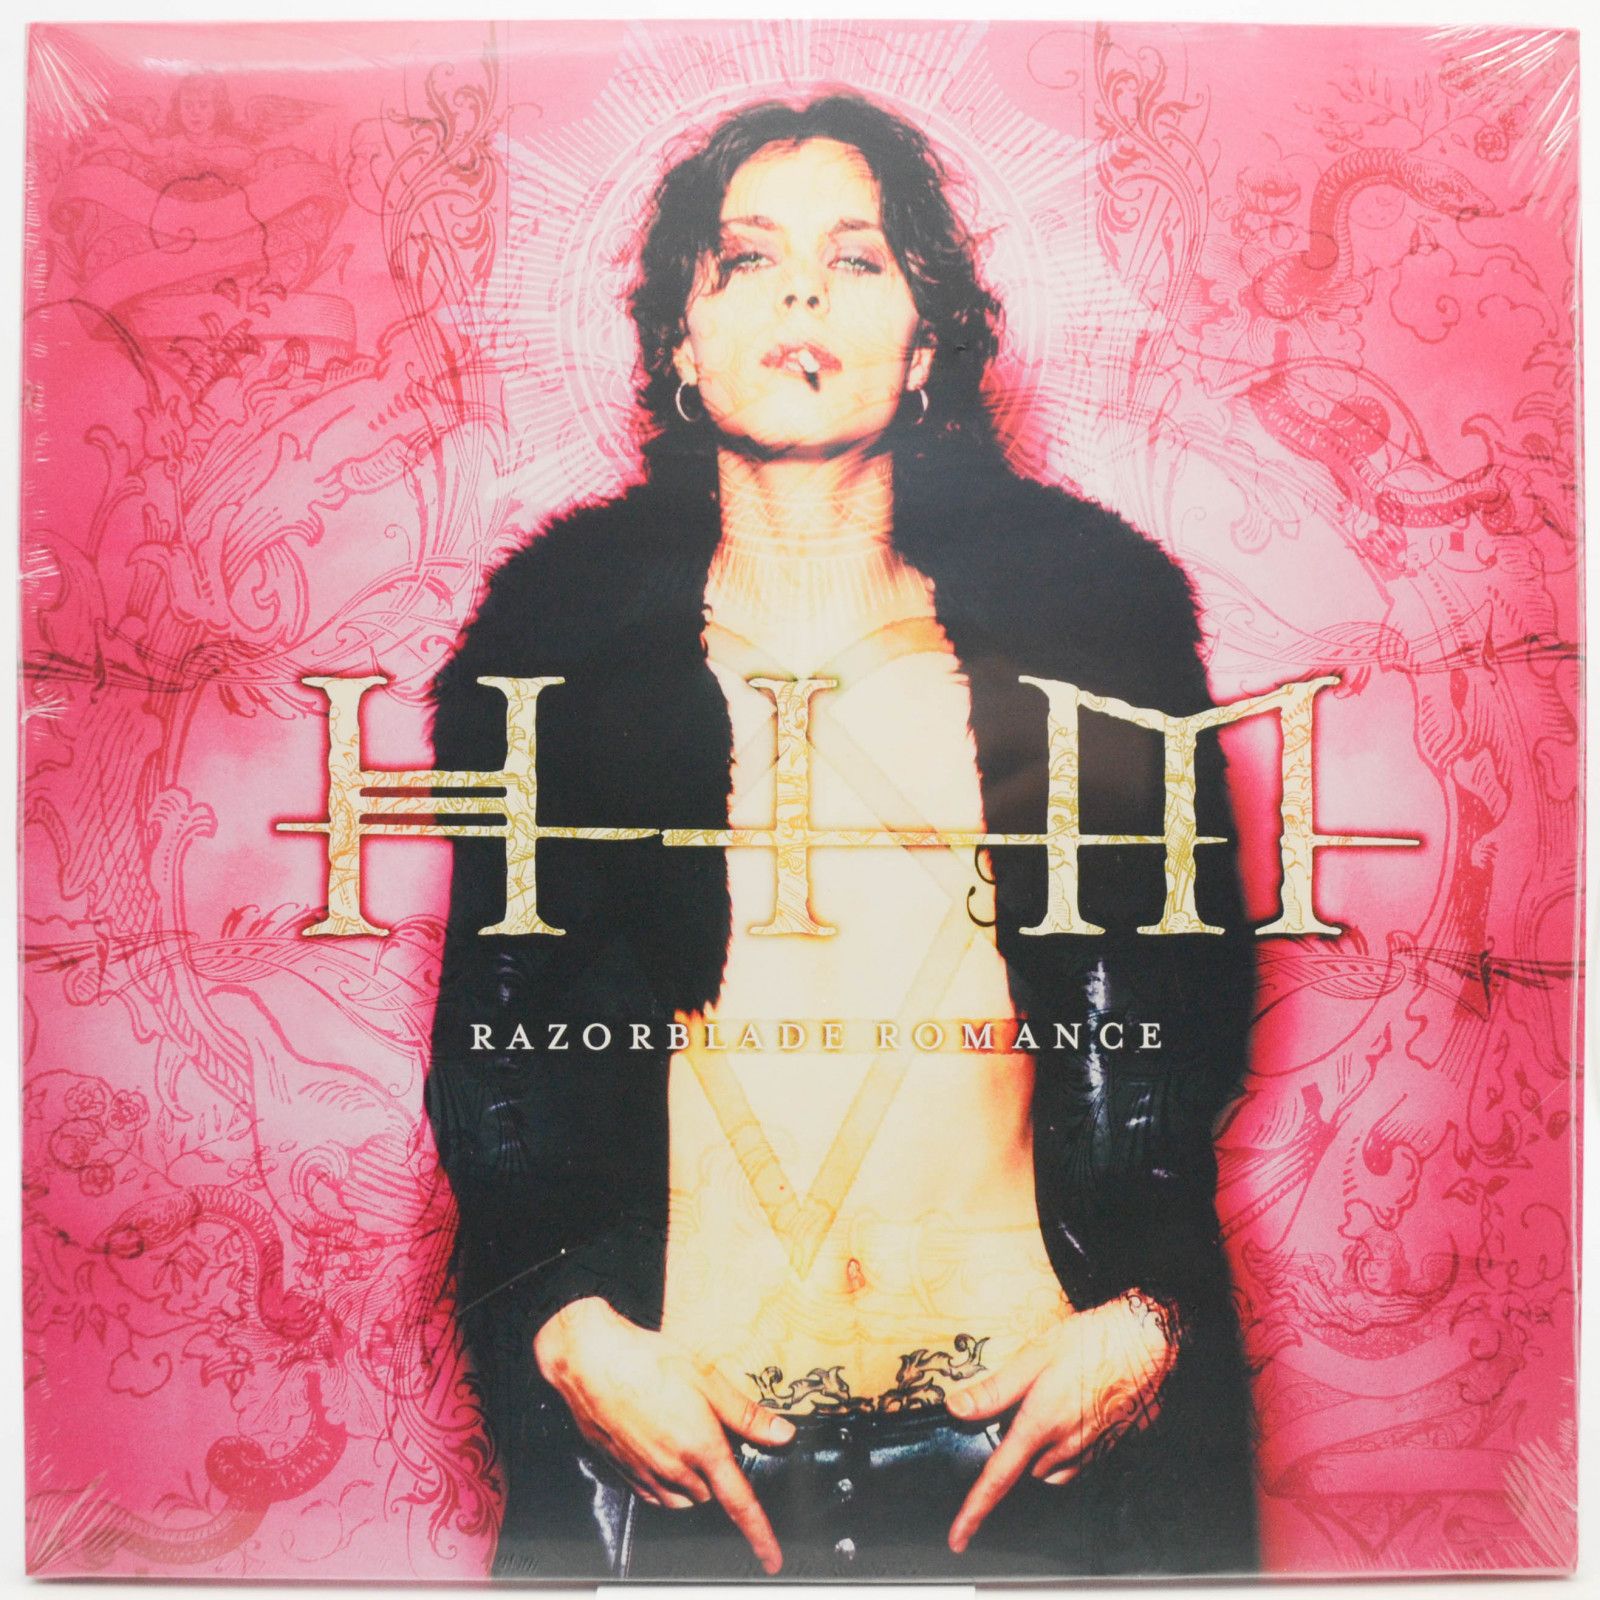 HIM — Razorblade Romance, 1999